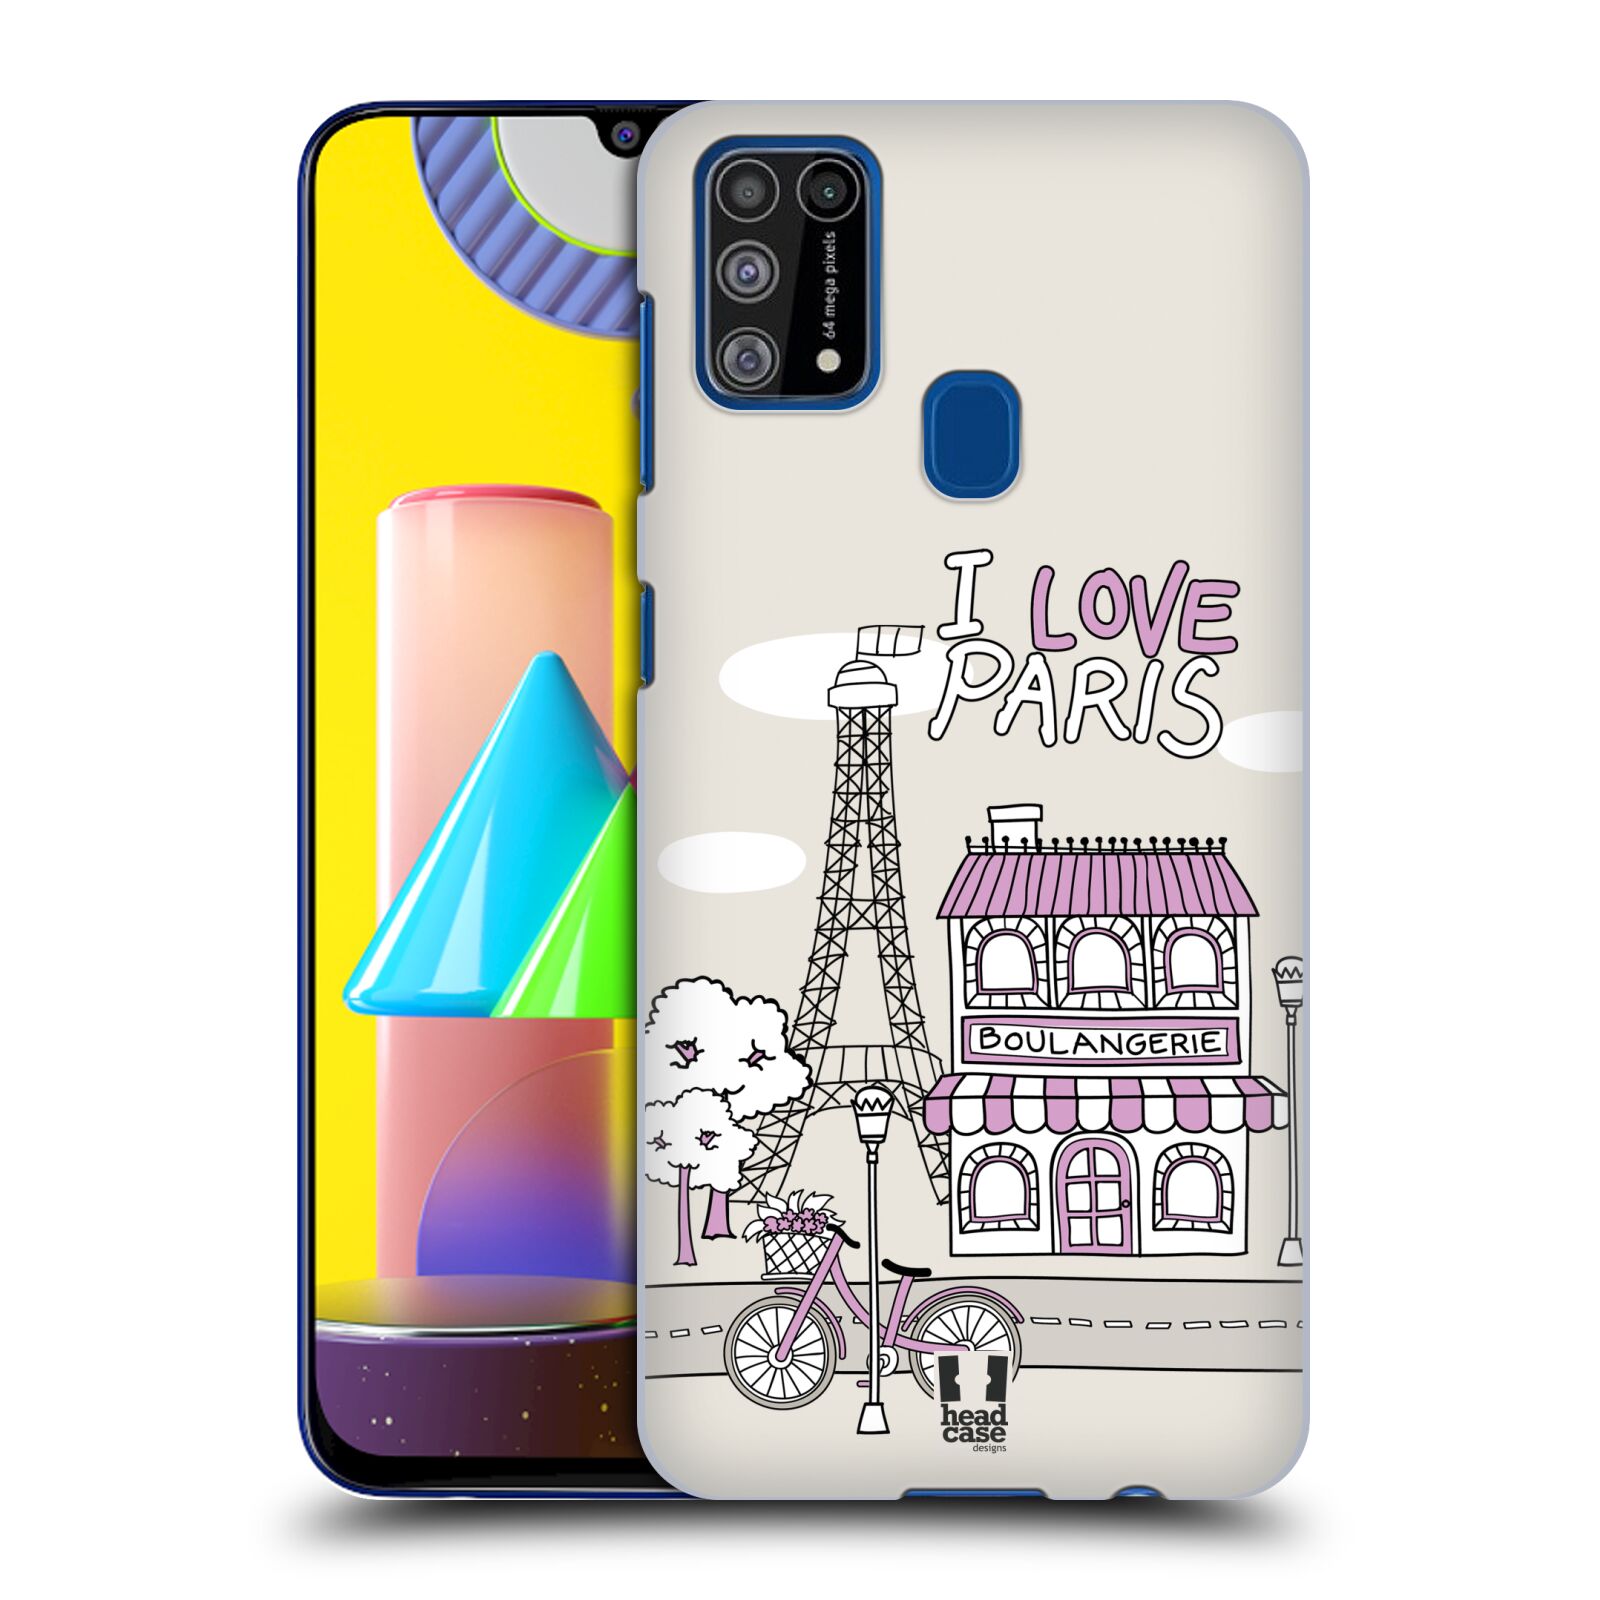 Plastový obal HEAD CASE na mobil Samsung Galaxy M31 vzor Kreslená městečka FIALOVÁ, Paříž, Francie, I LOVE PARIS